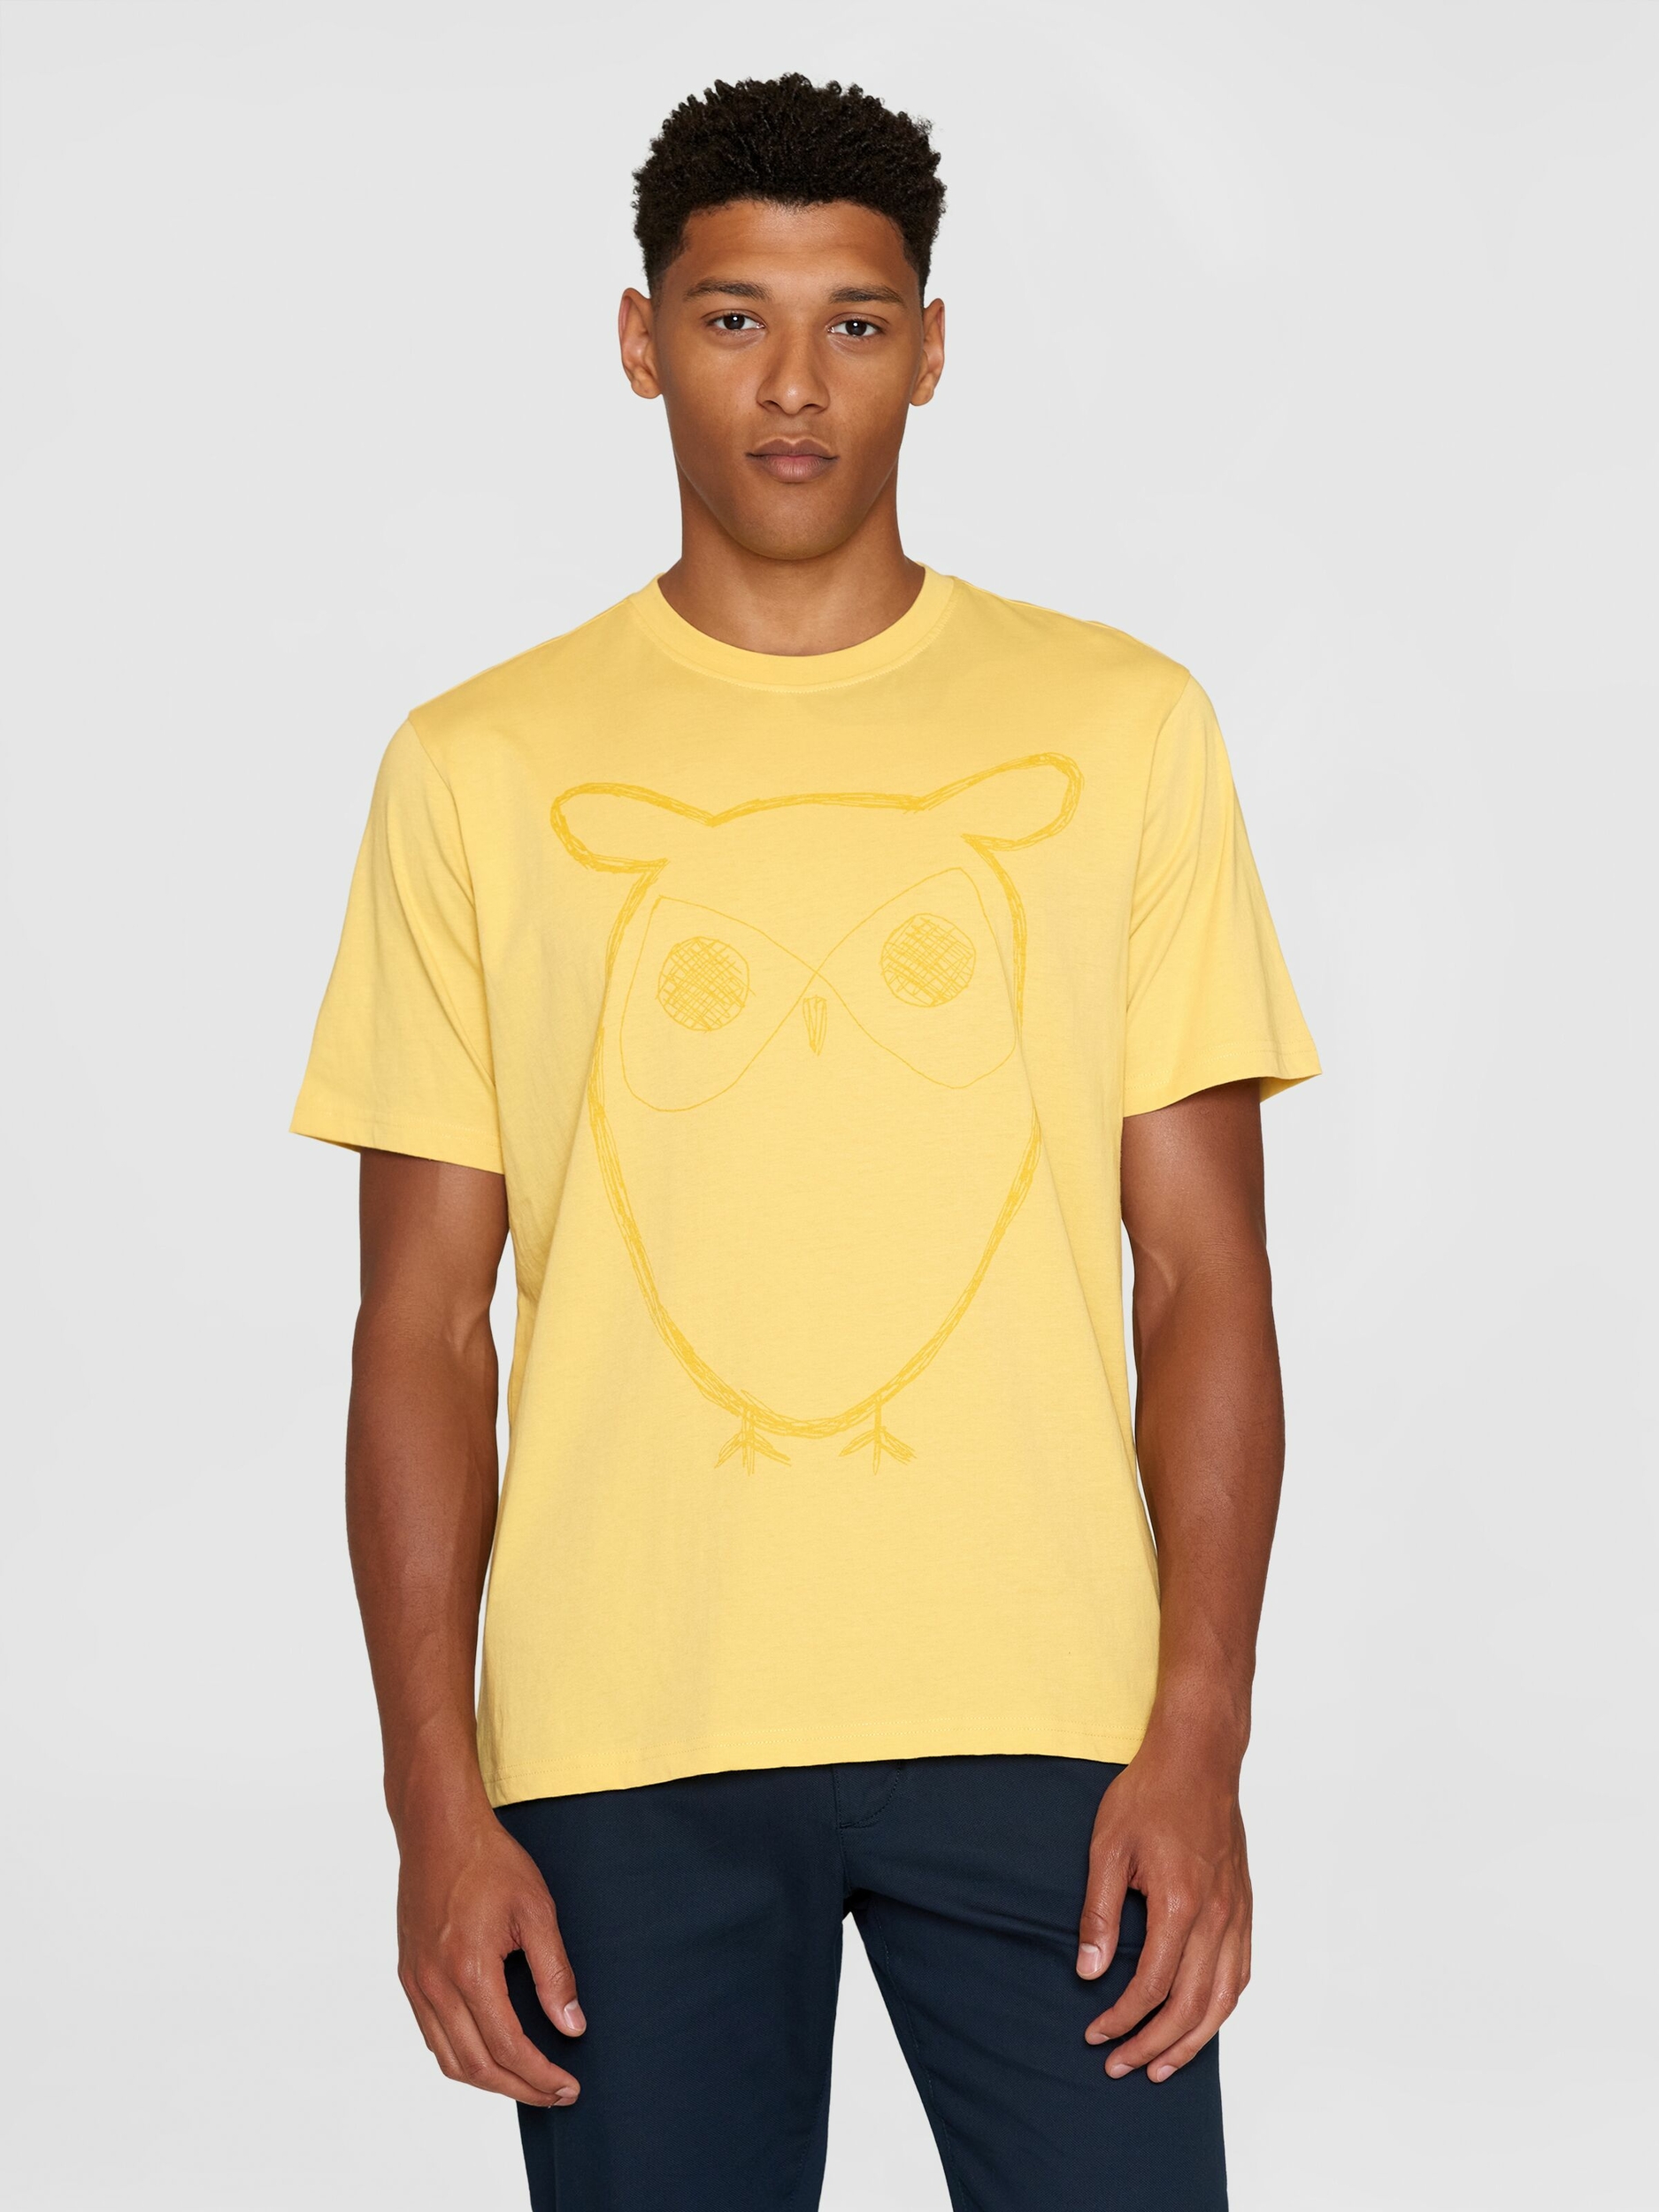 T-shirt Grand Hibou - misted yellow - coton biologique - Knowledge Cotton Apparel 01